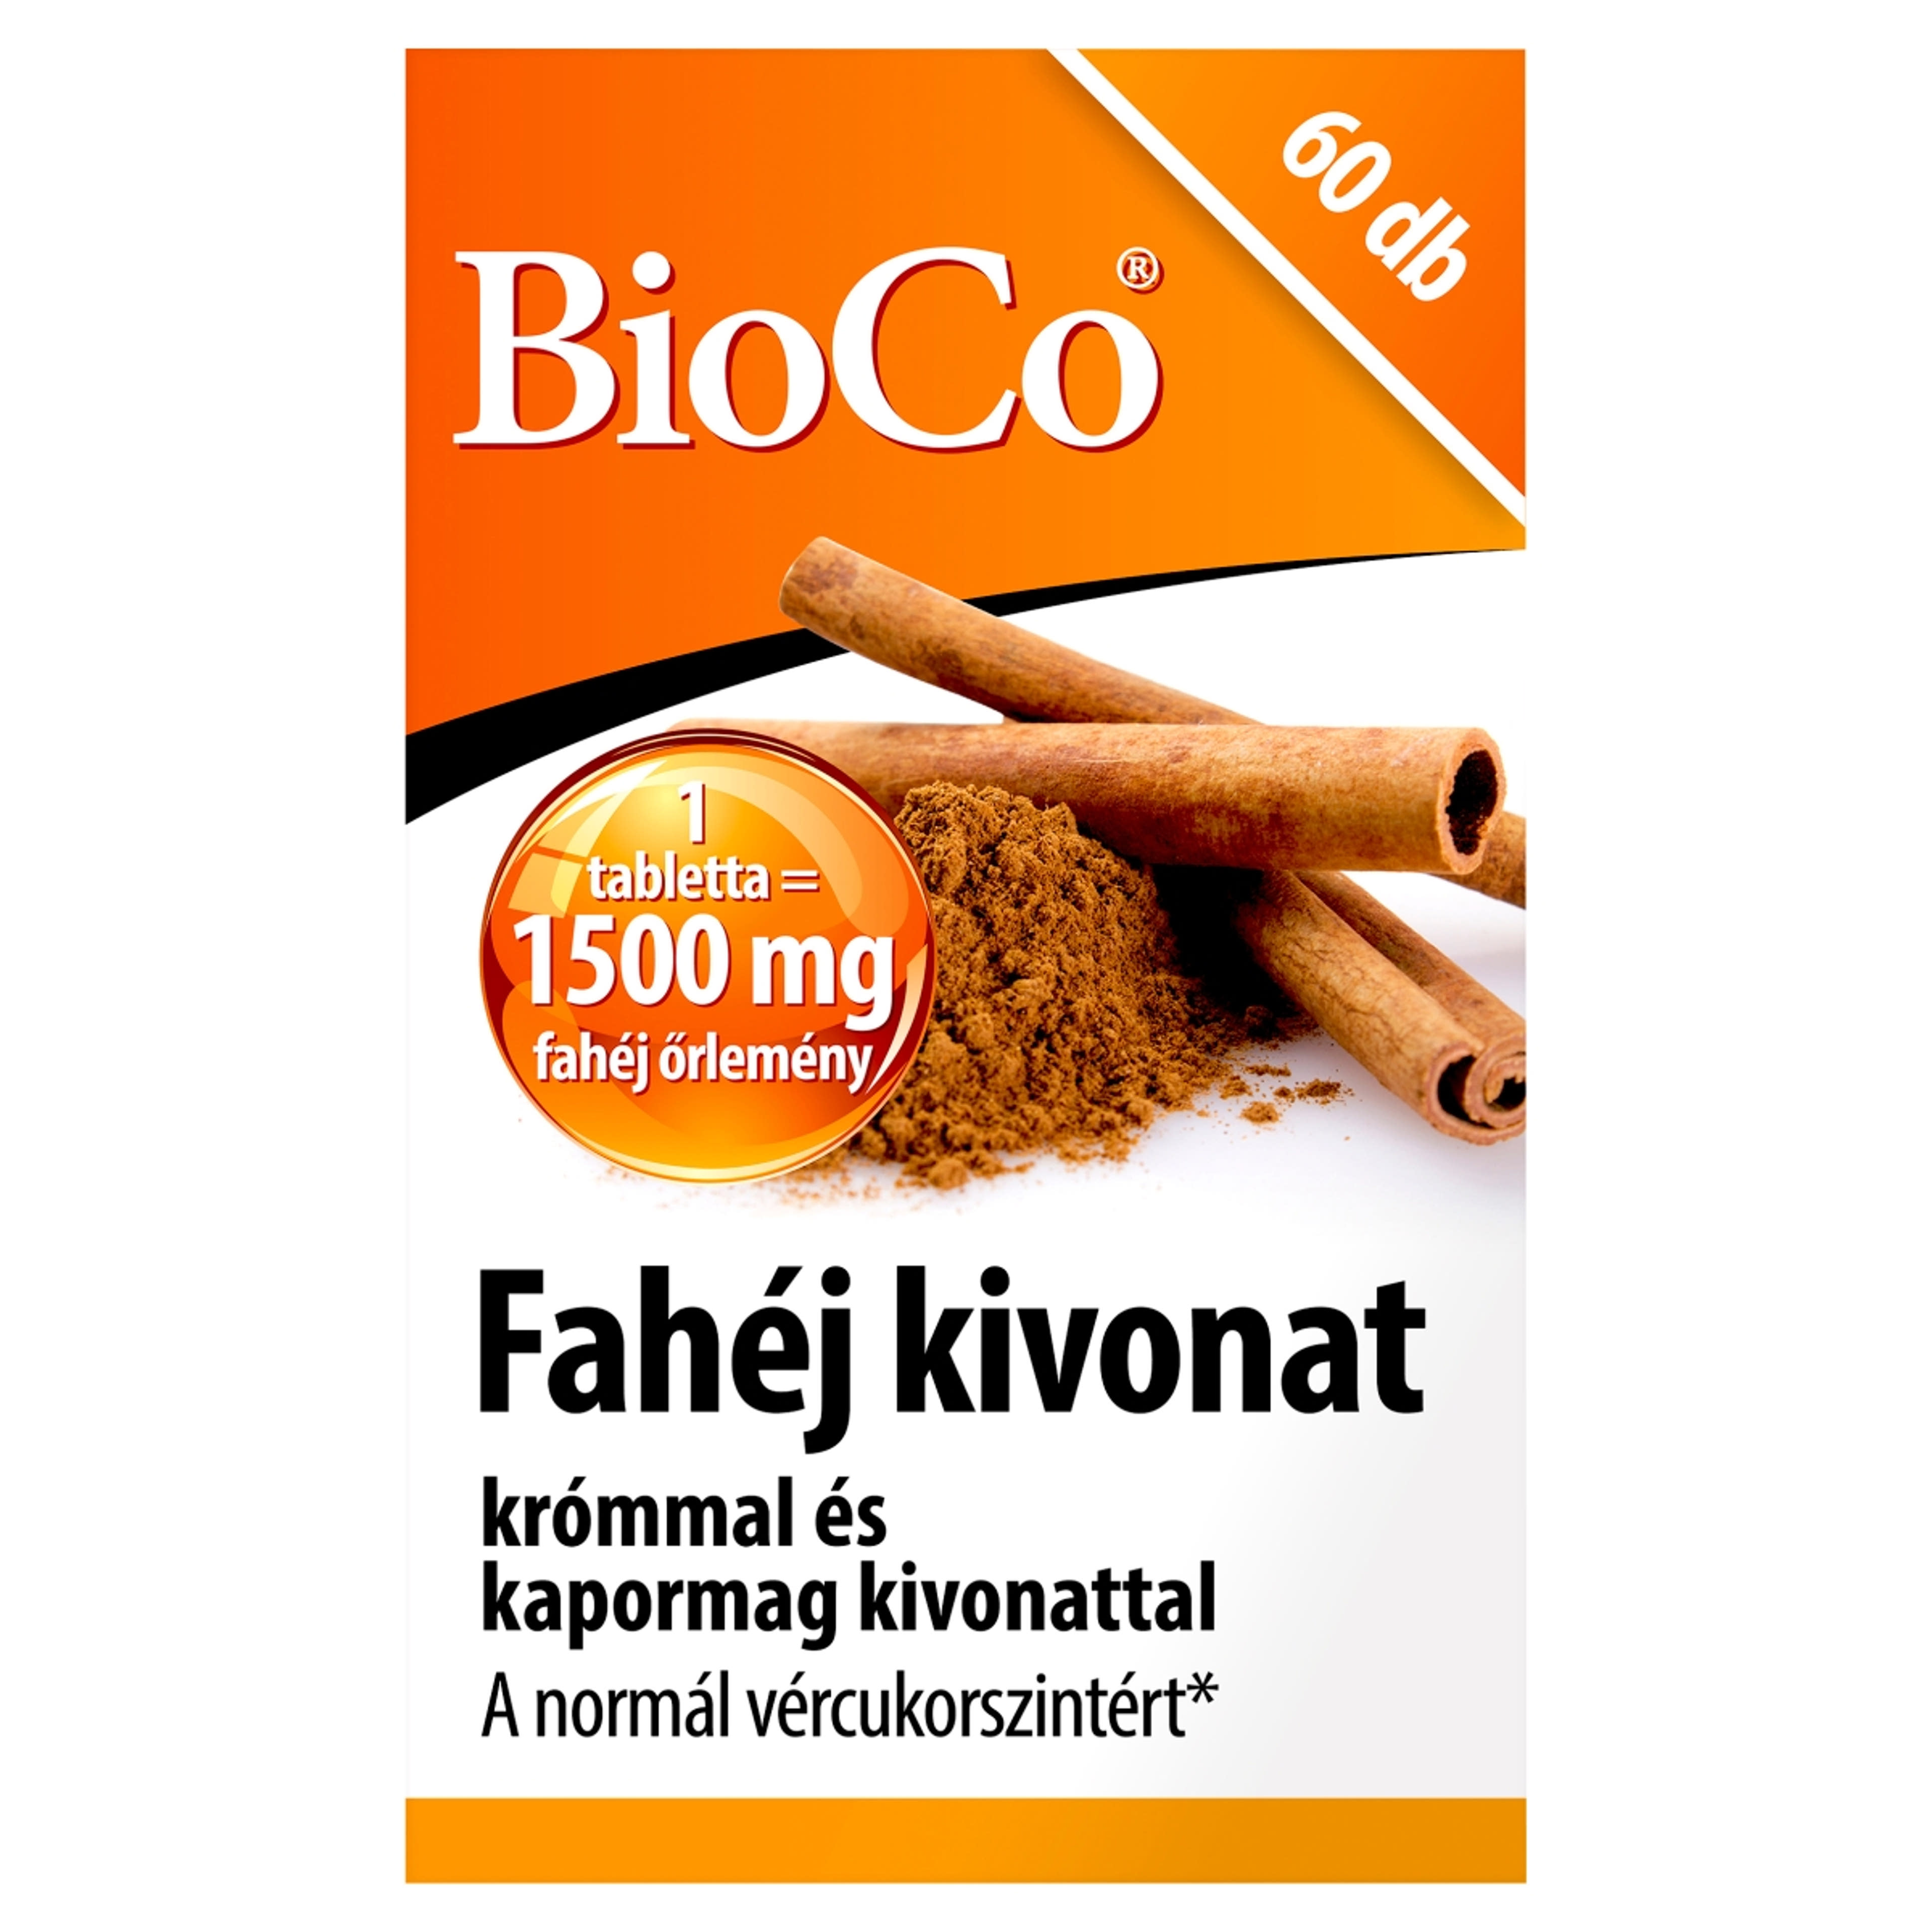 Biocon Fahéj kivonat étrenkiegészítő tabletta - 60 db-1